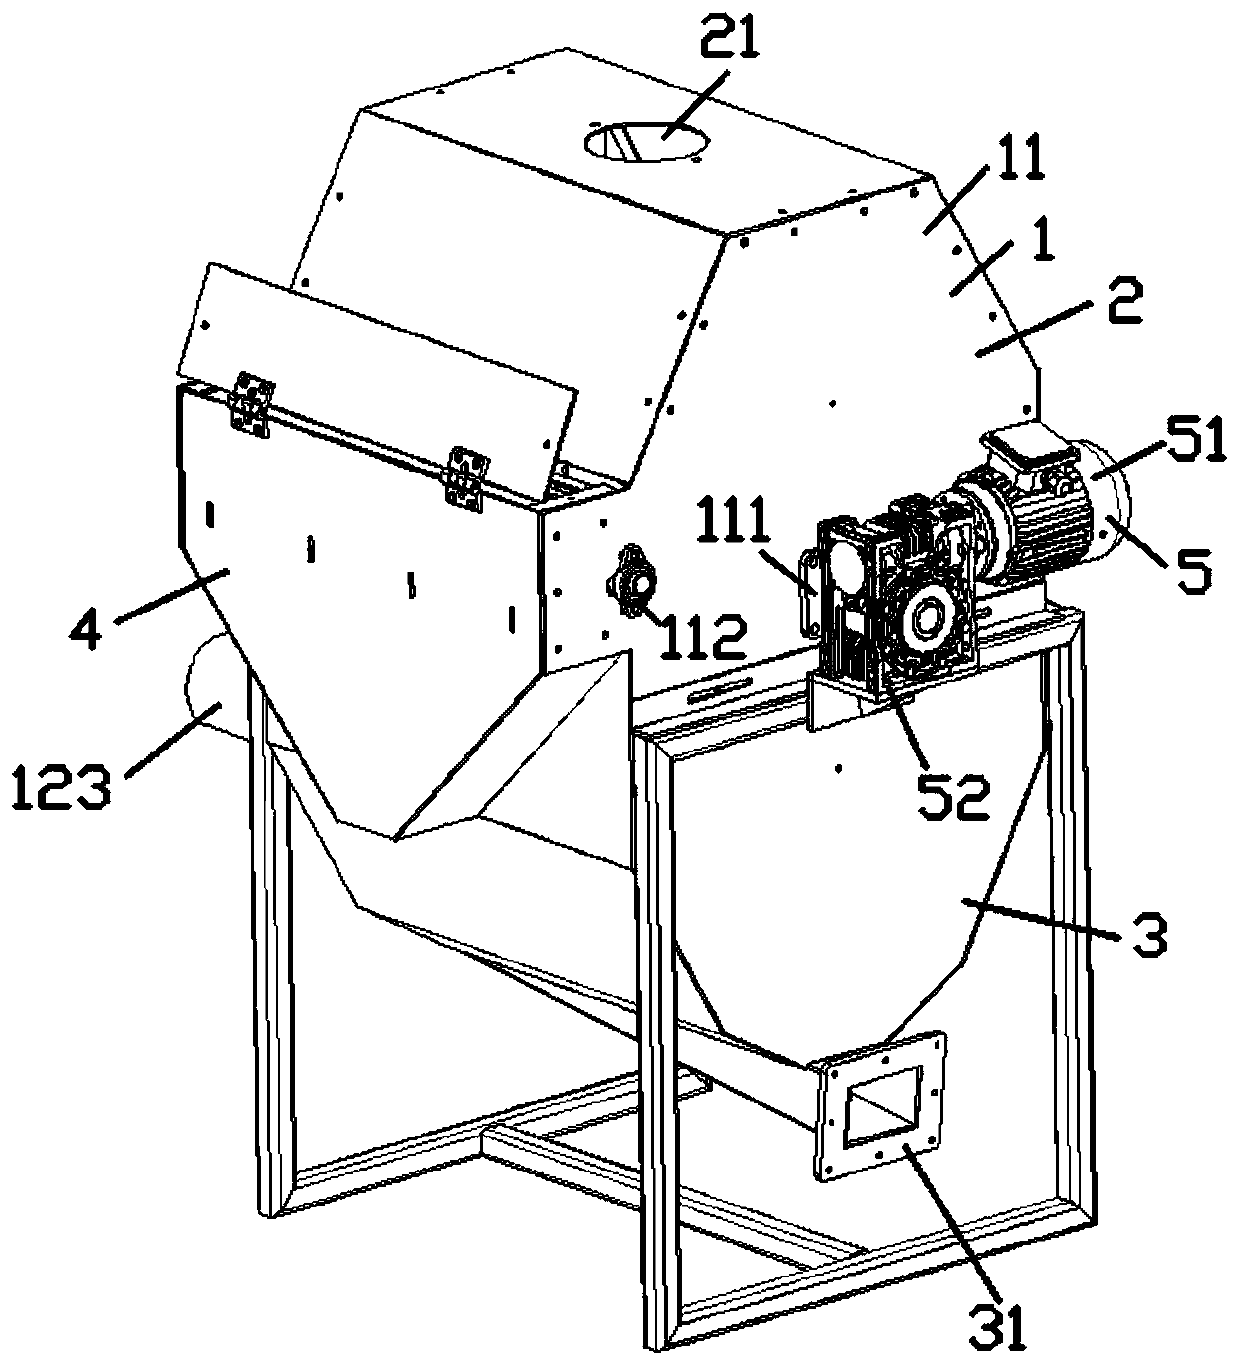 Material screening machine